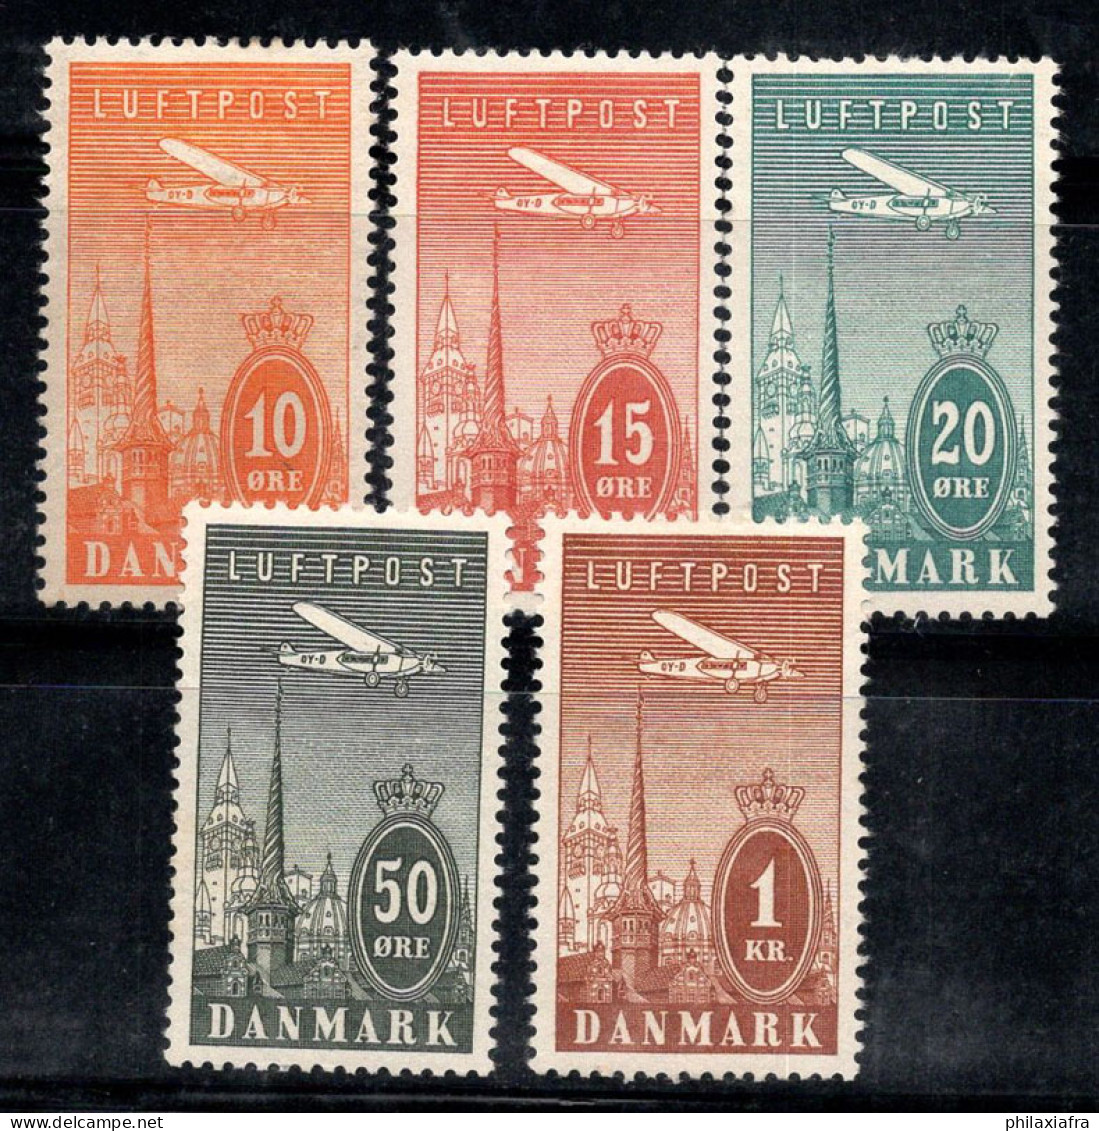 Danemark 1934 Mi. 217-221 Neuf * MH 100% Poste Aérienne - Airmail